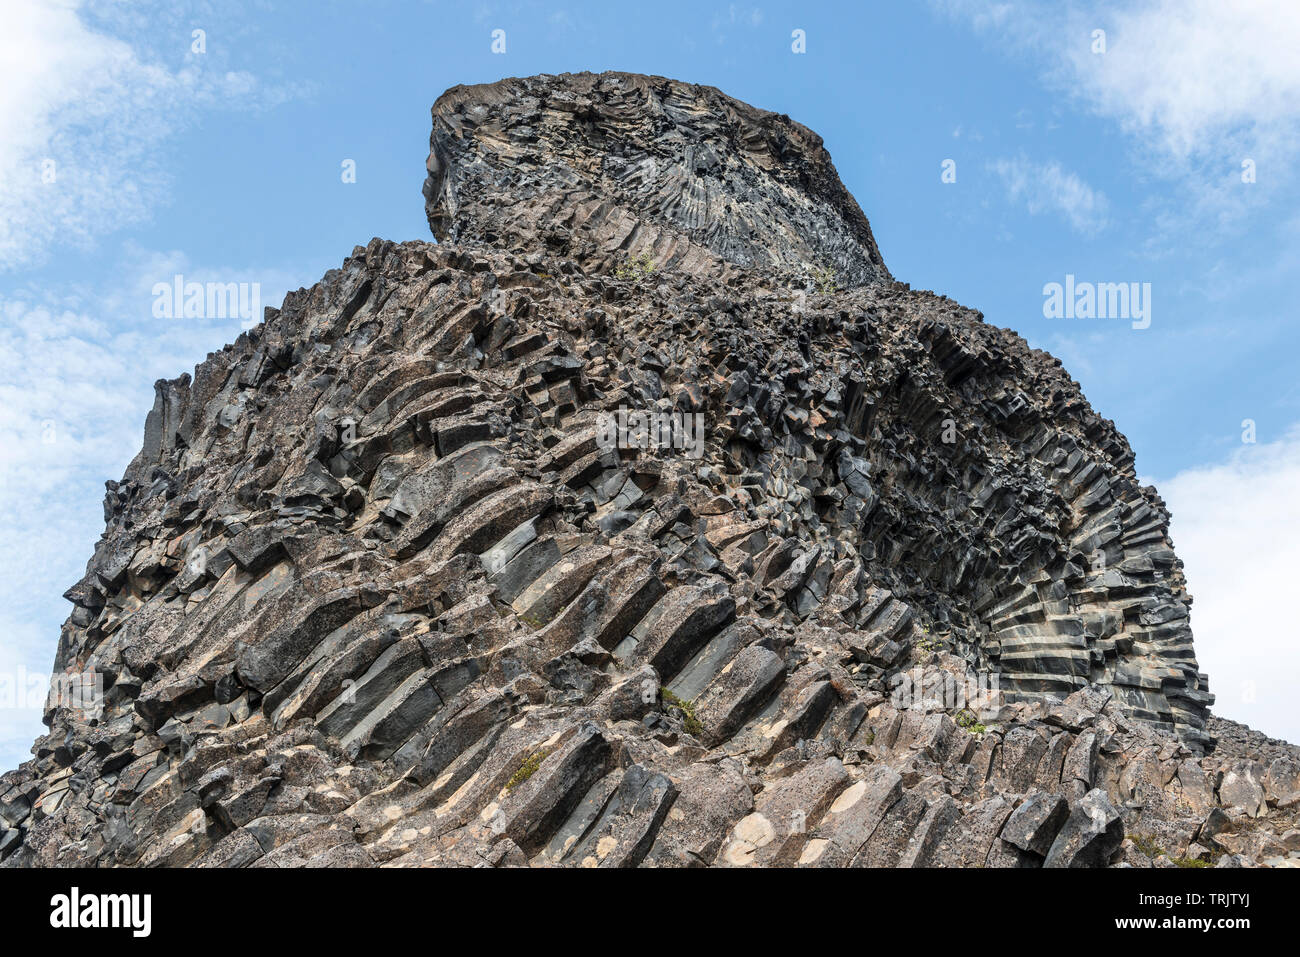 Hljóðaklettar (Echo Rocks), extraordinary volcanic columnar basalt rock formations in the Jökulsárgljúfur canyon in NE Iceland Stock Photo